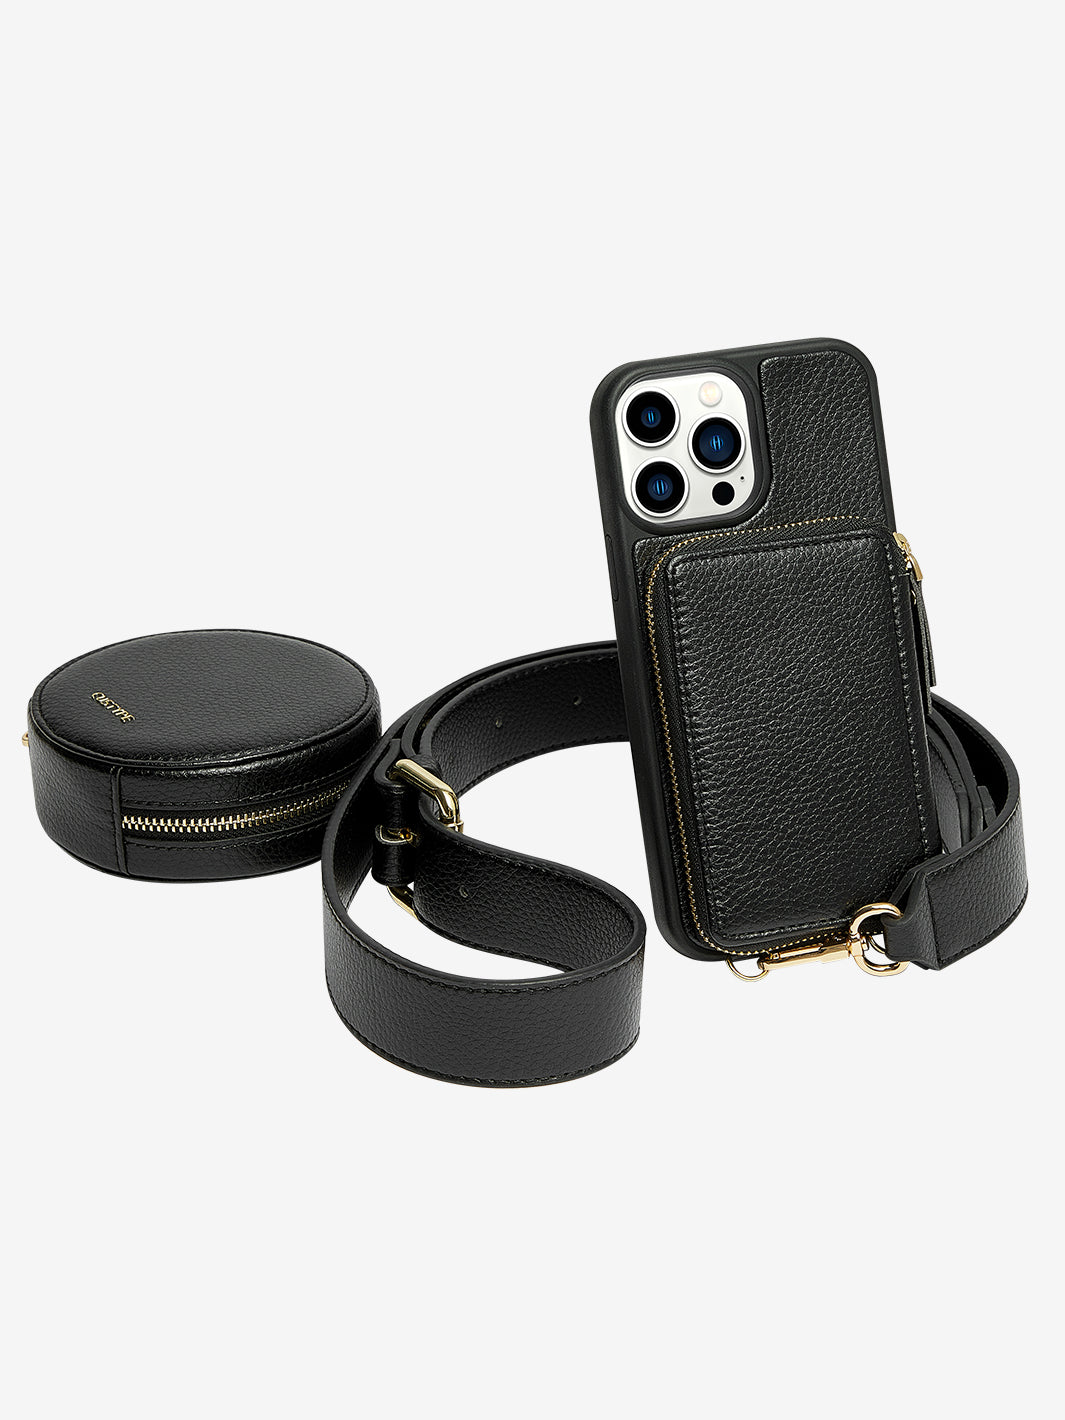 Custype crossbody iPhone case with Round bag black-06